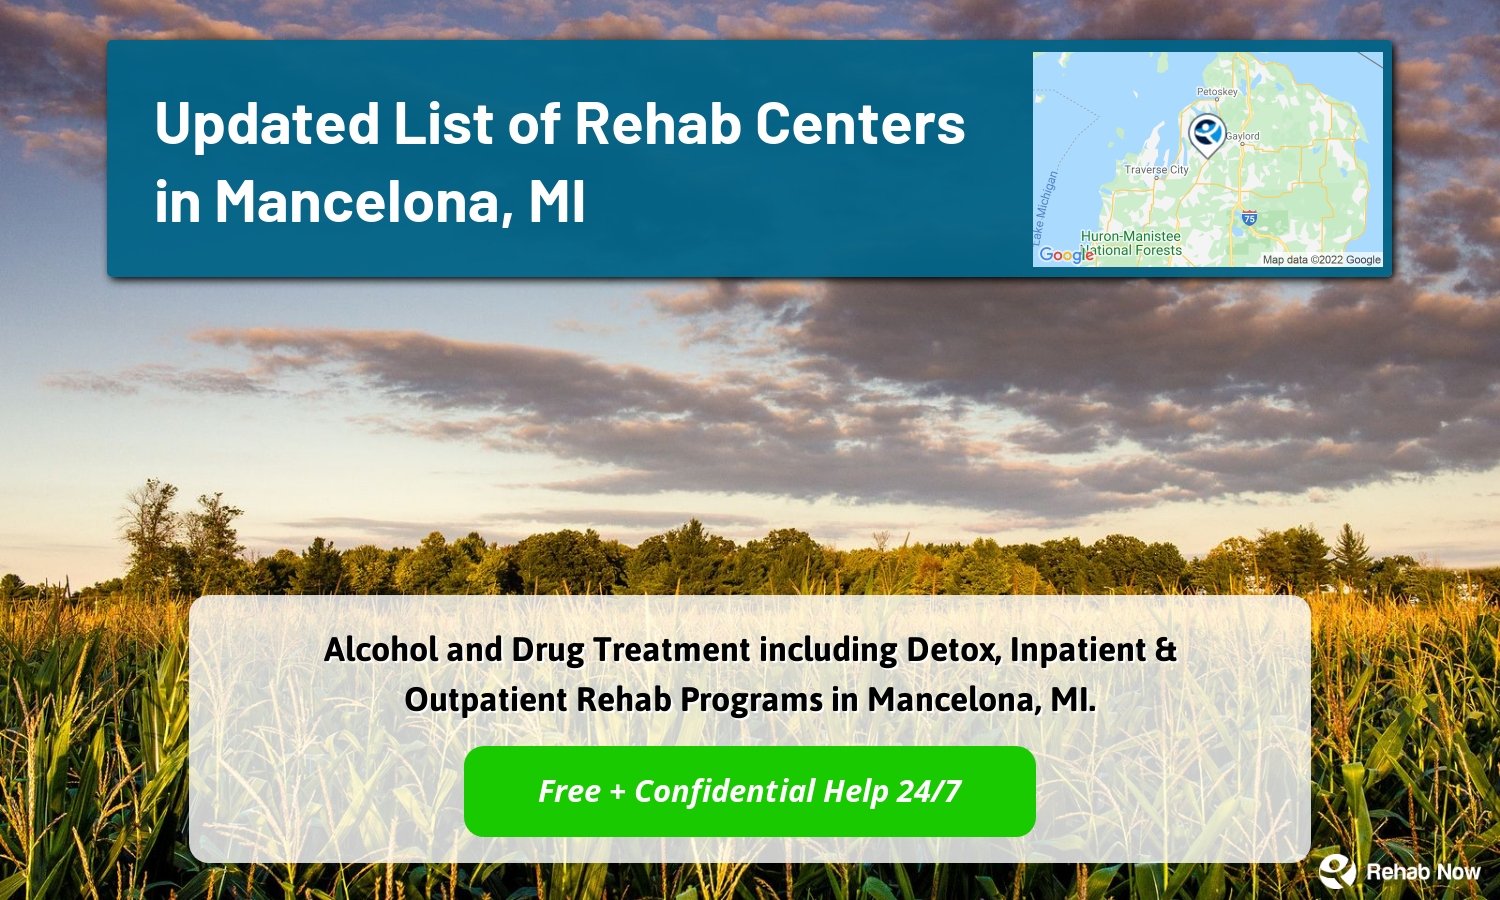 Alcohol and Drug Treatment including Detox, Inpatient & Outpatient Rehab Programs in Mancelona, MI.